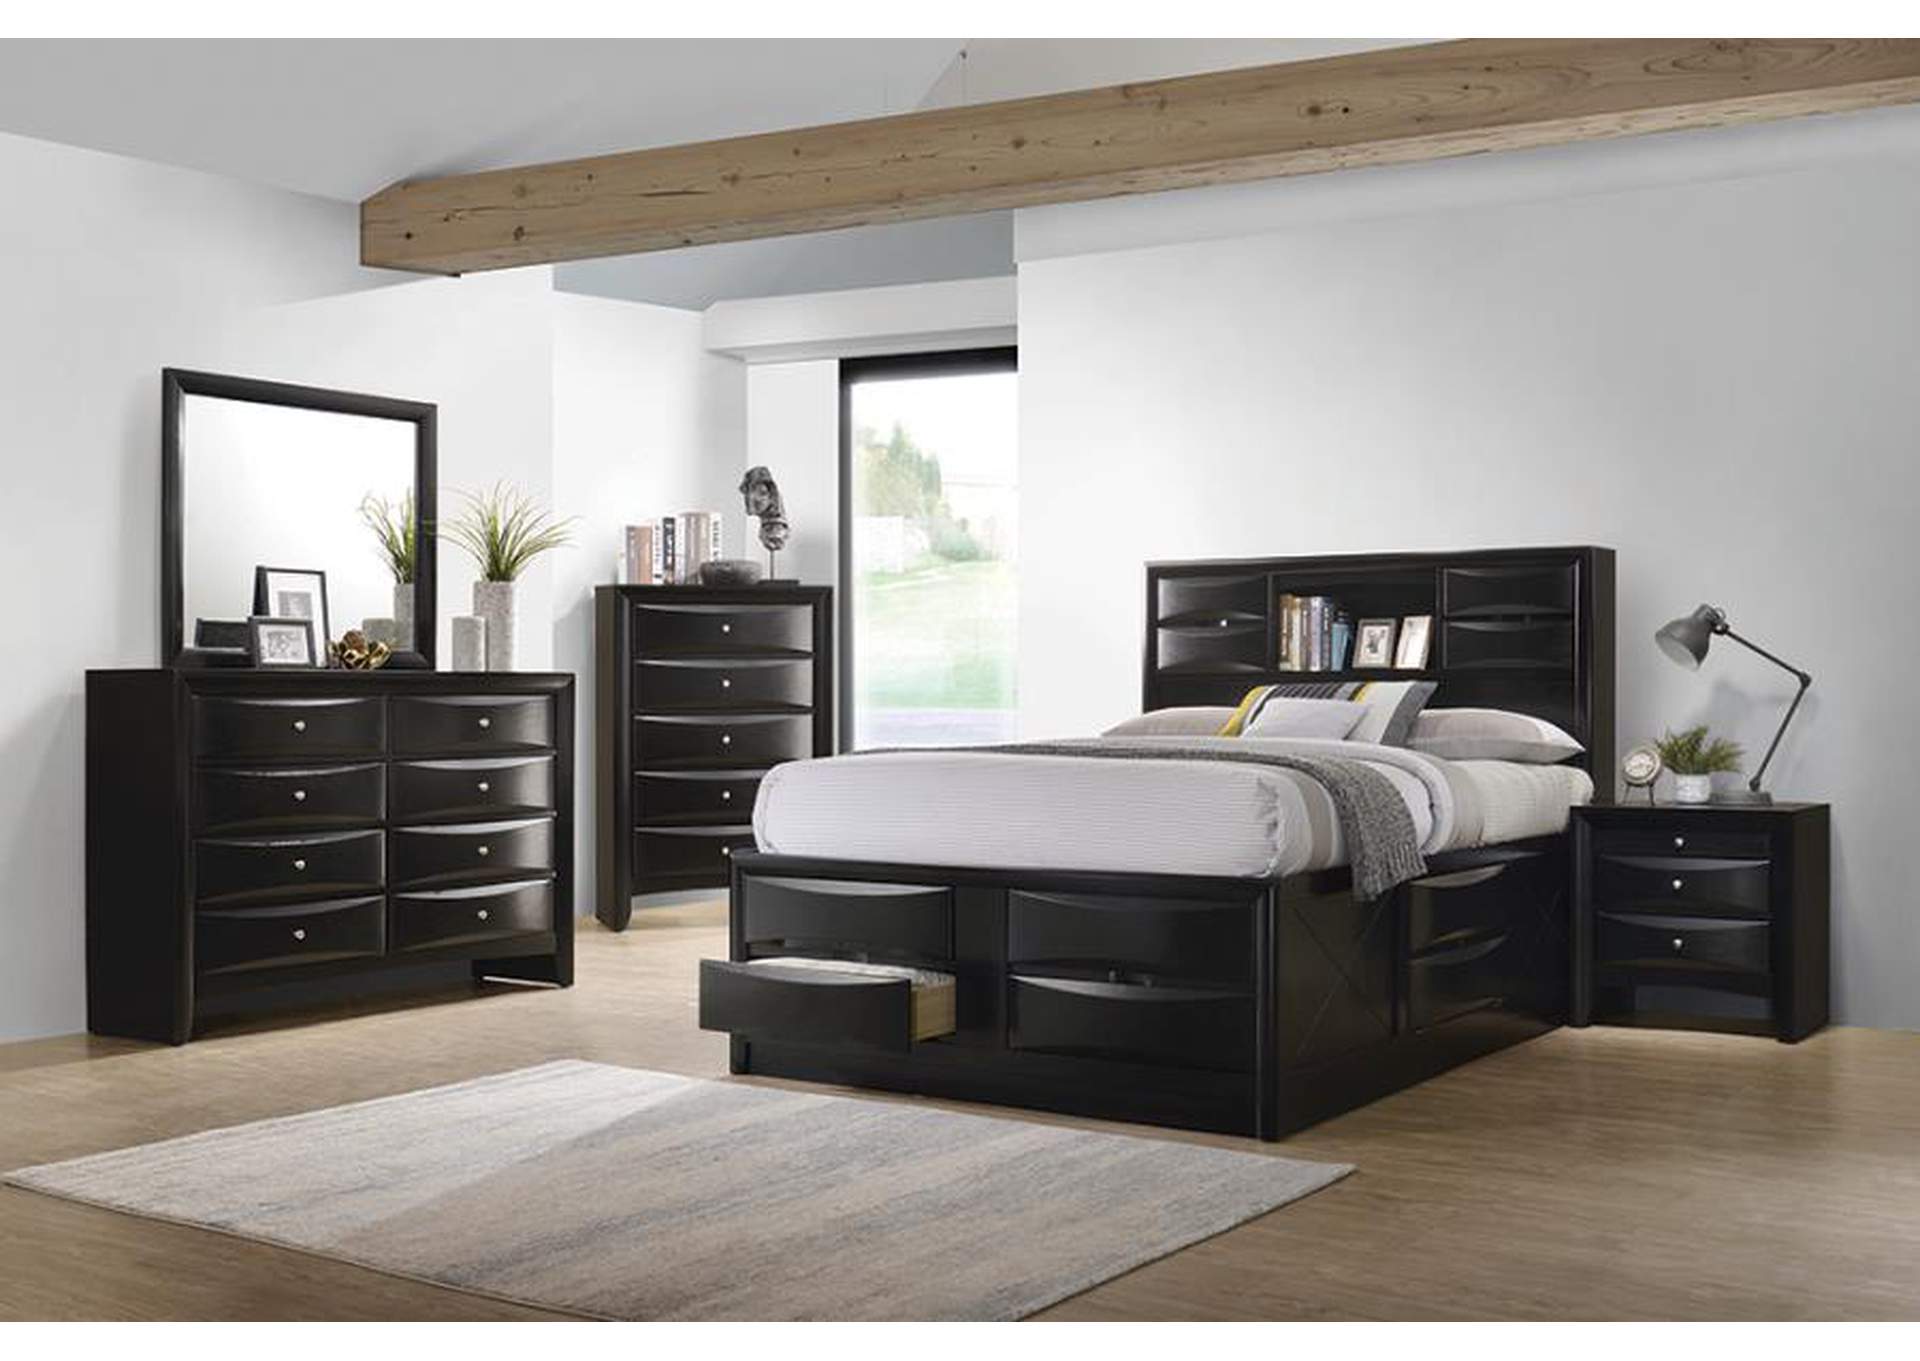 Briana Storage Bedroom Set With Bookcase Headboard Black